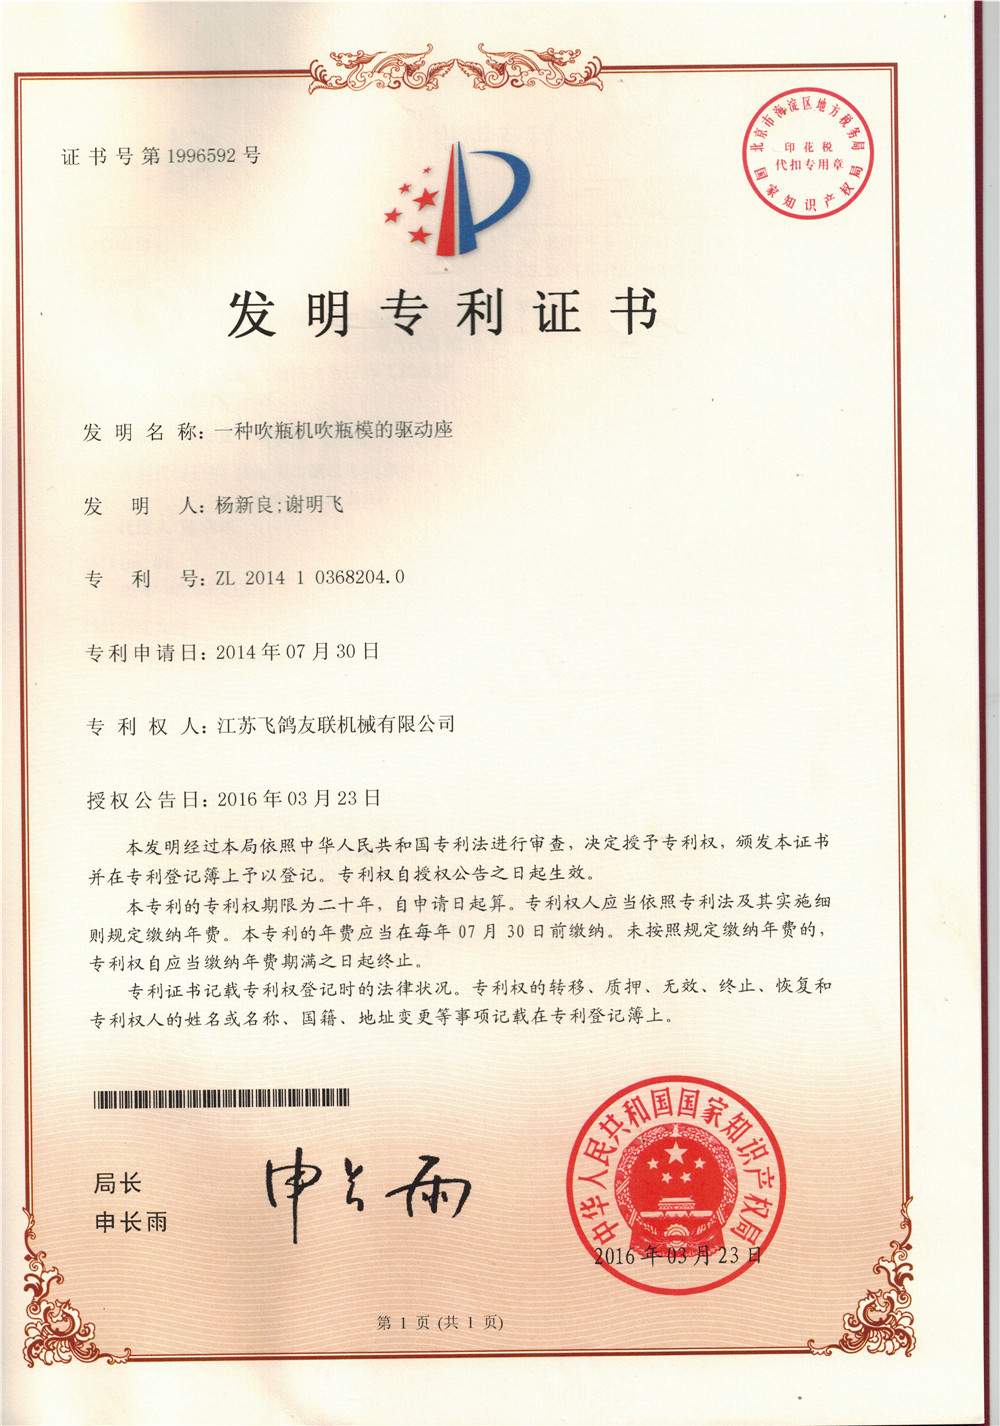 China Jiangsu Faygo Union Machinery Co., Ltd. Certificaciones